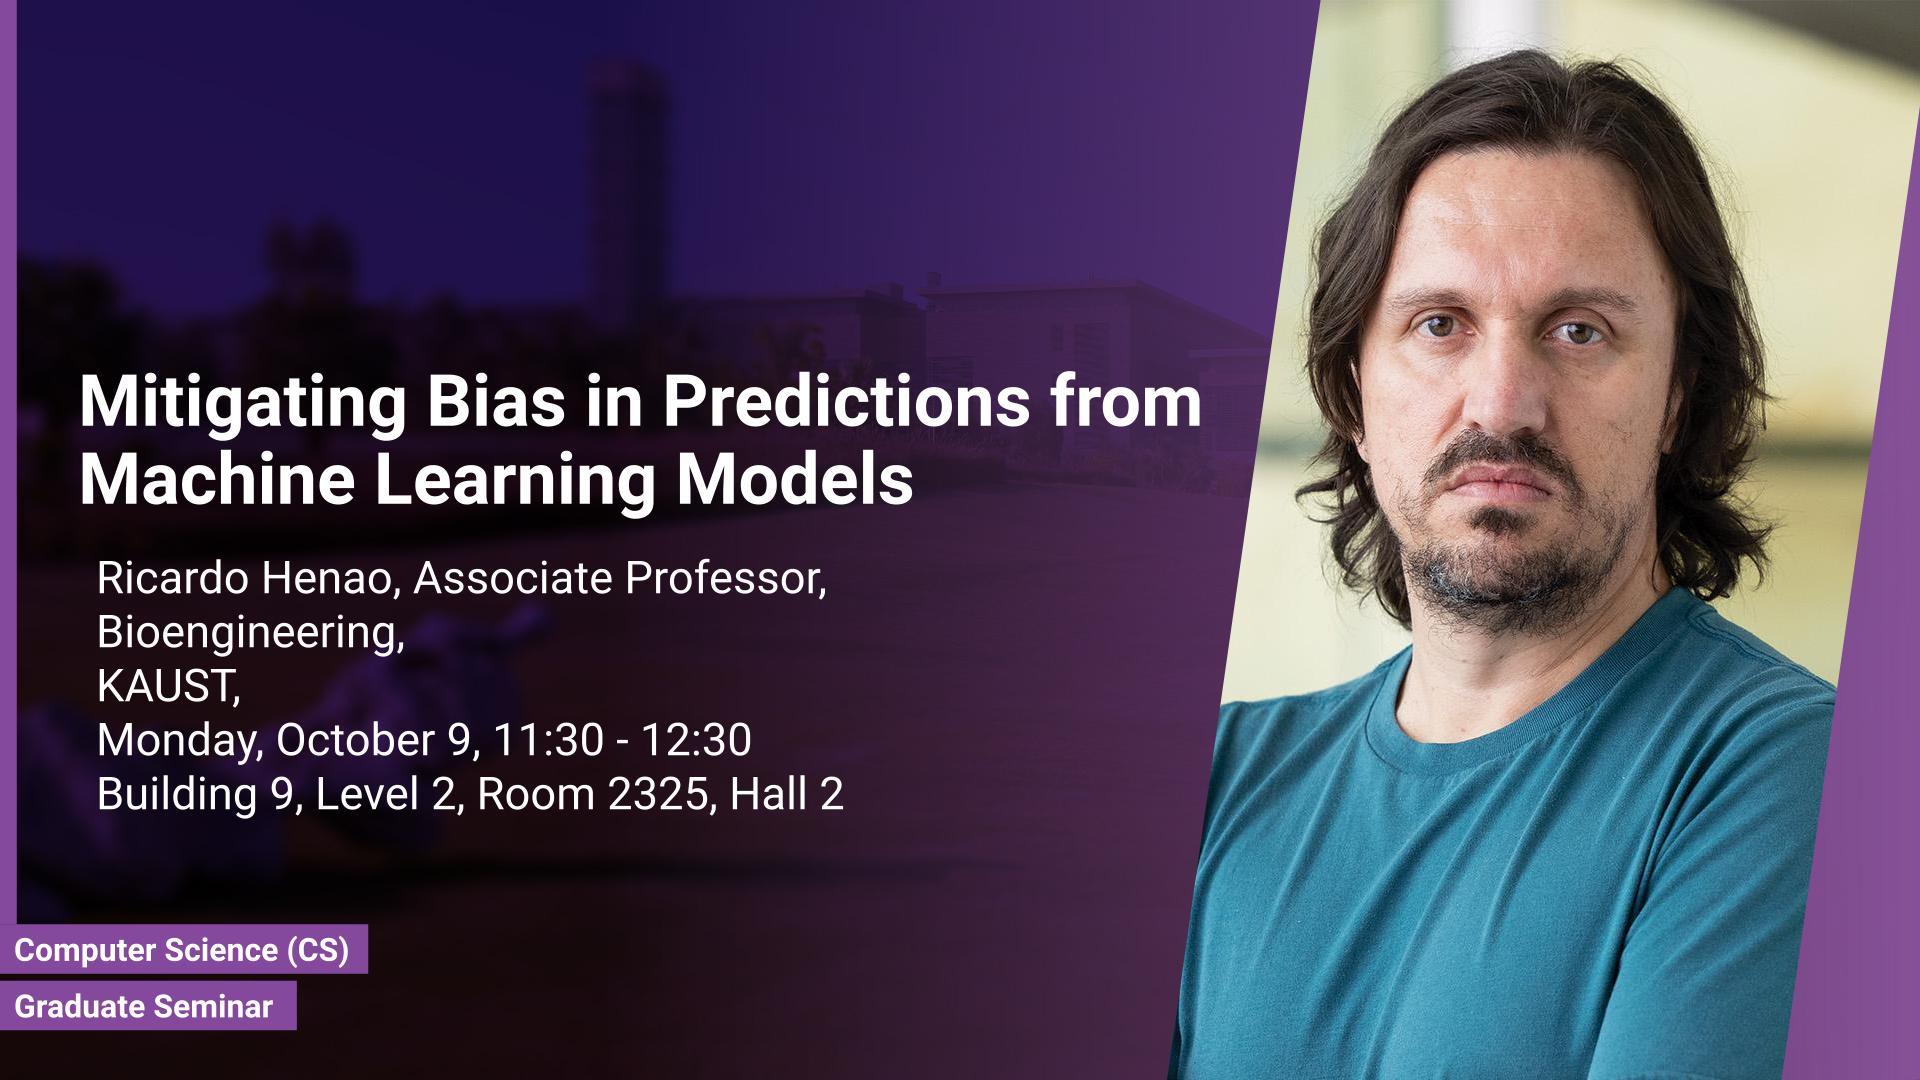 KAUST-CEMSE-CS-Graduate-Seminar-Ricardo-Henao-Mitigating-Bias-in-Prediction-from-ML-Models.jpg